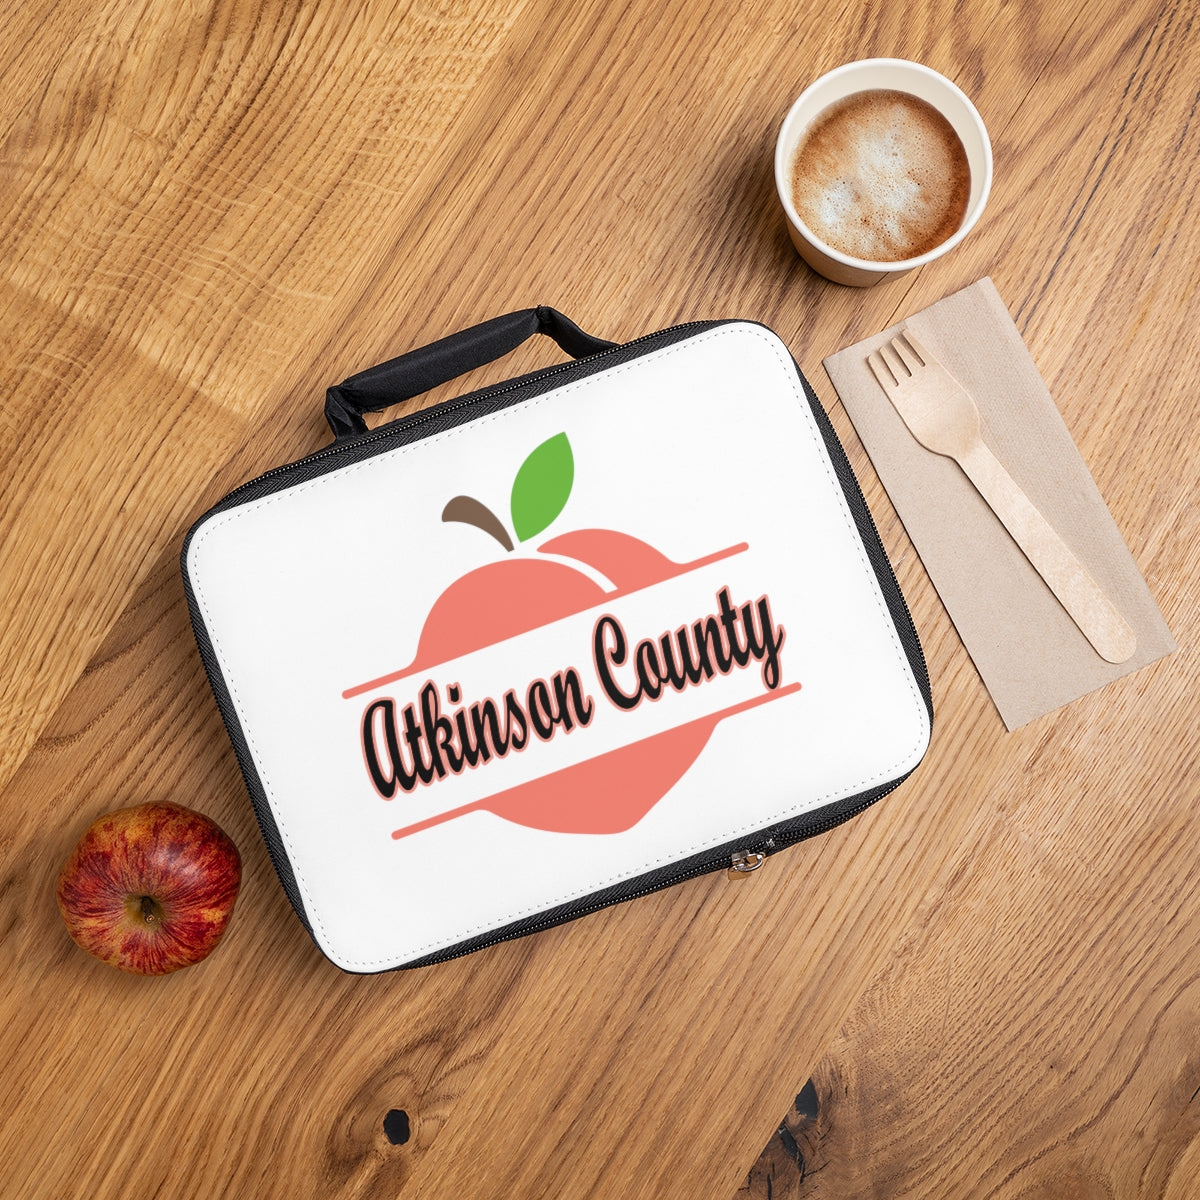 Atkinson County Georgia Lunch Bag